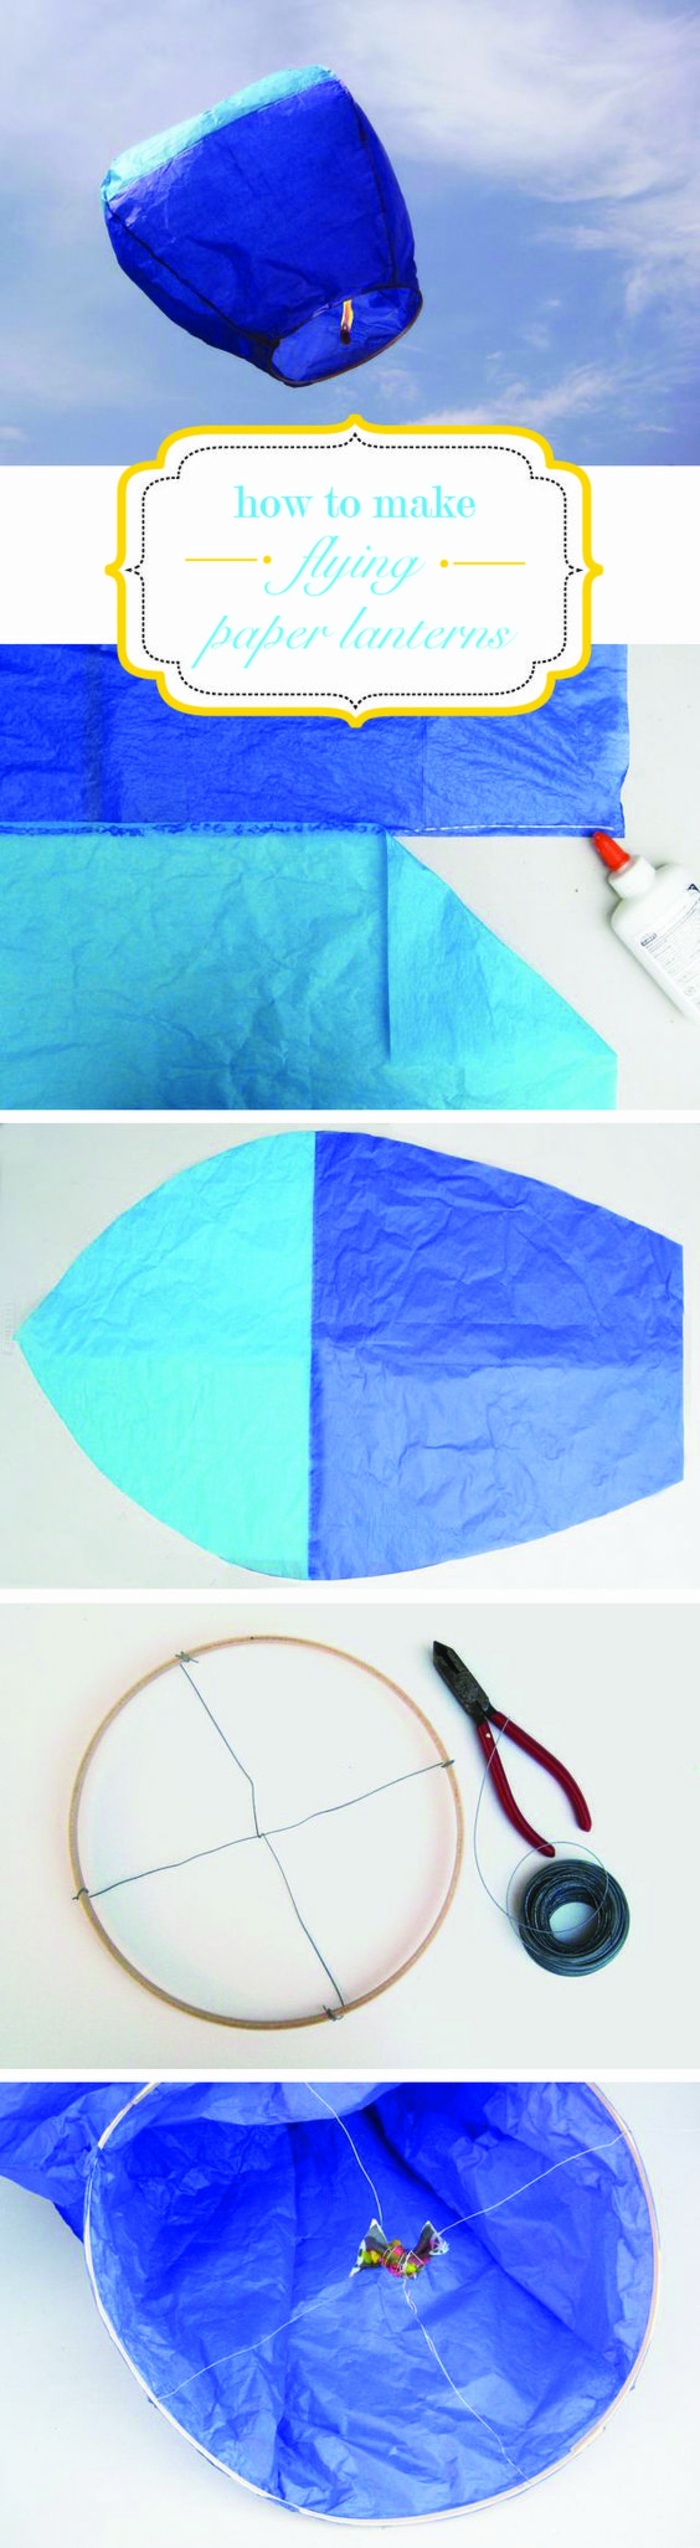 crea tu propia linterna voladora con papel azul, alicates, hilo